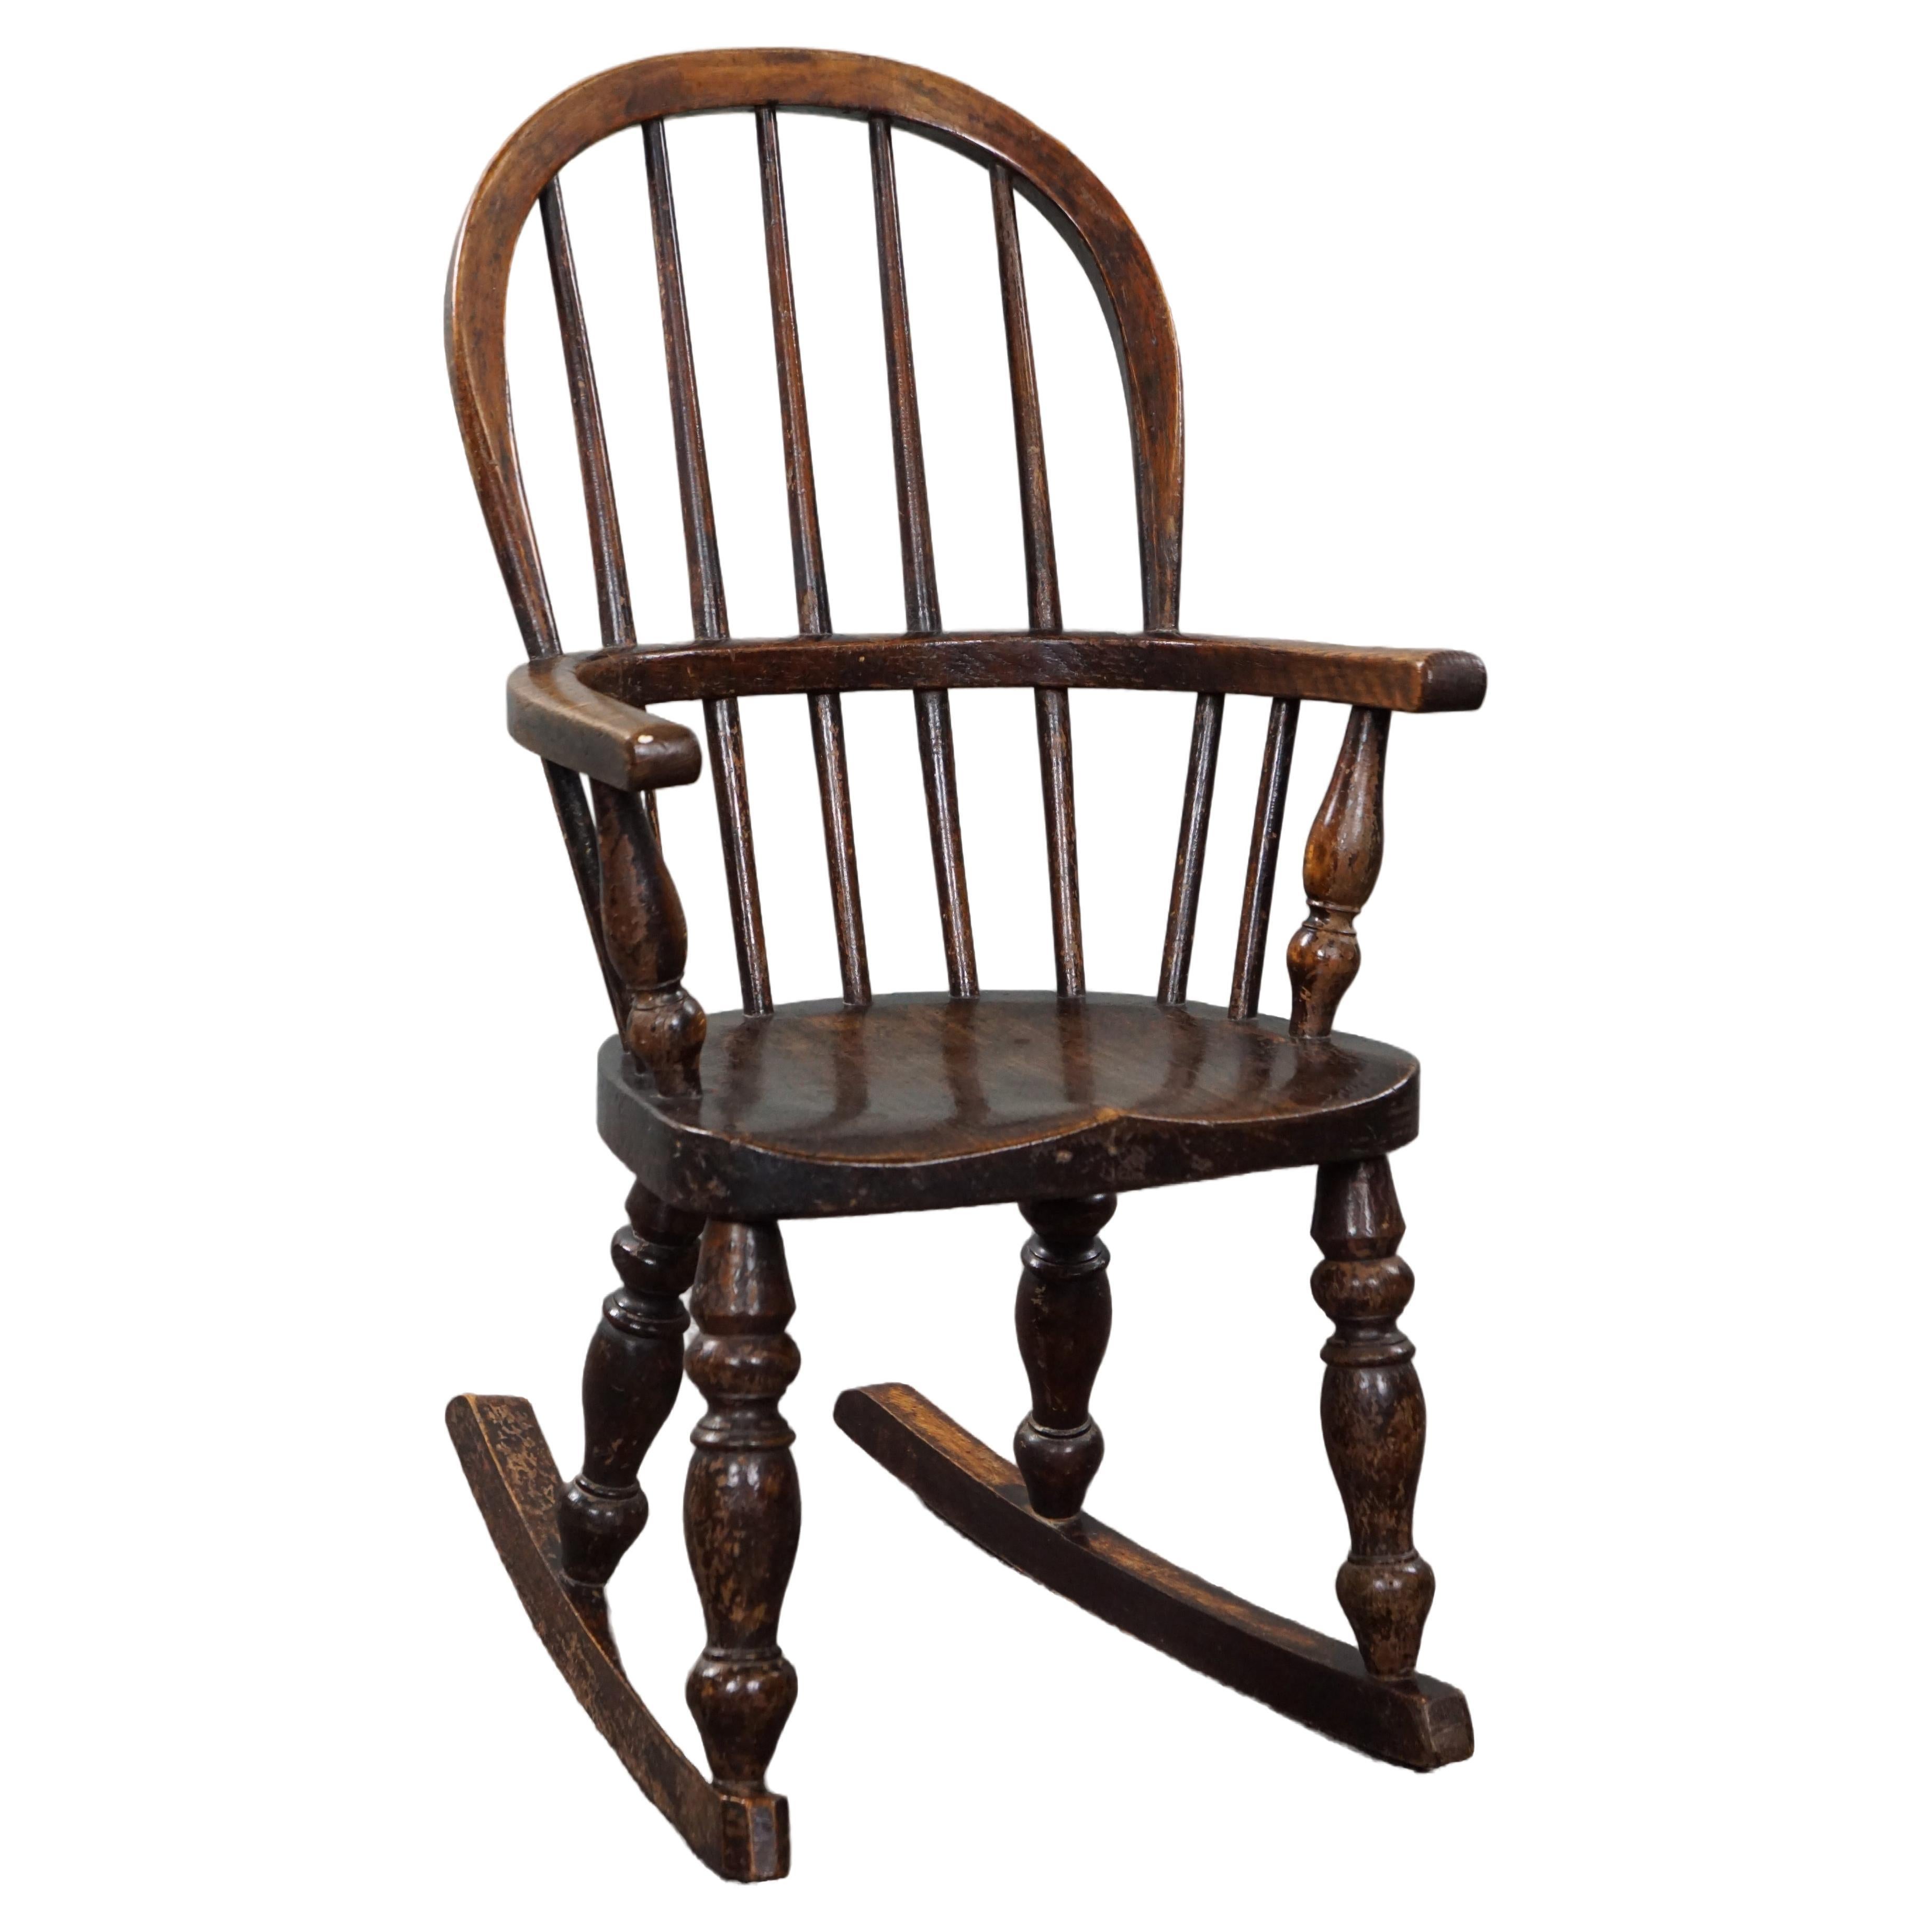 Antique Windsor child's rocking chair, around 1850 For Sale